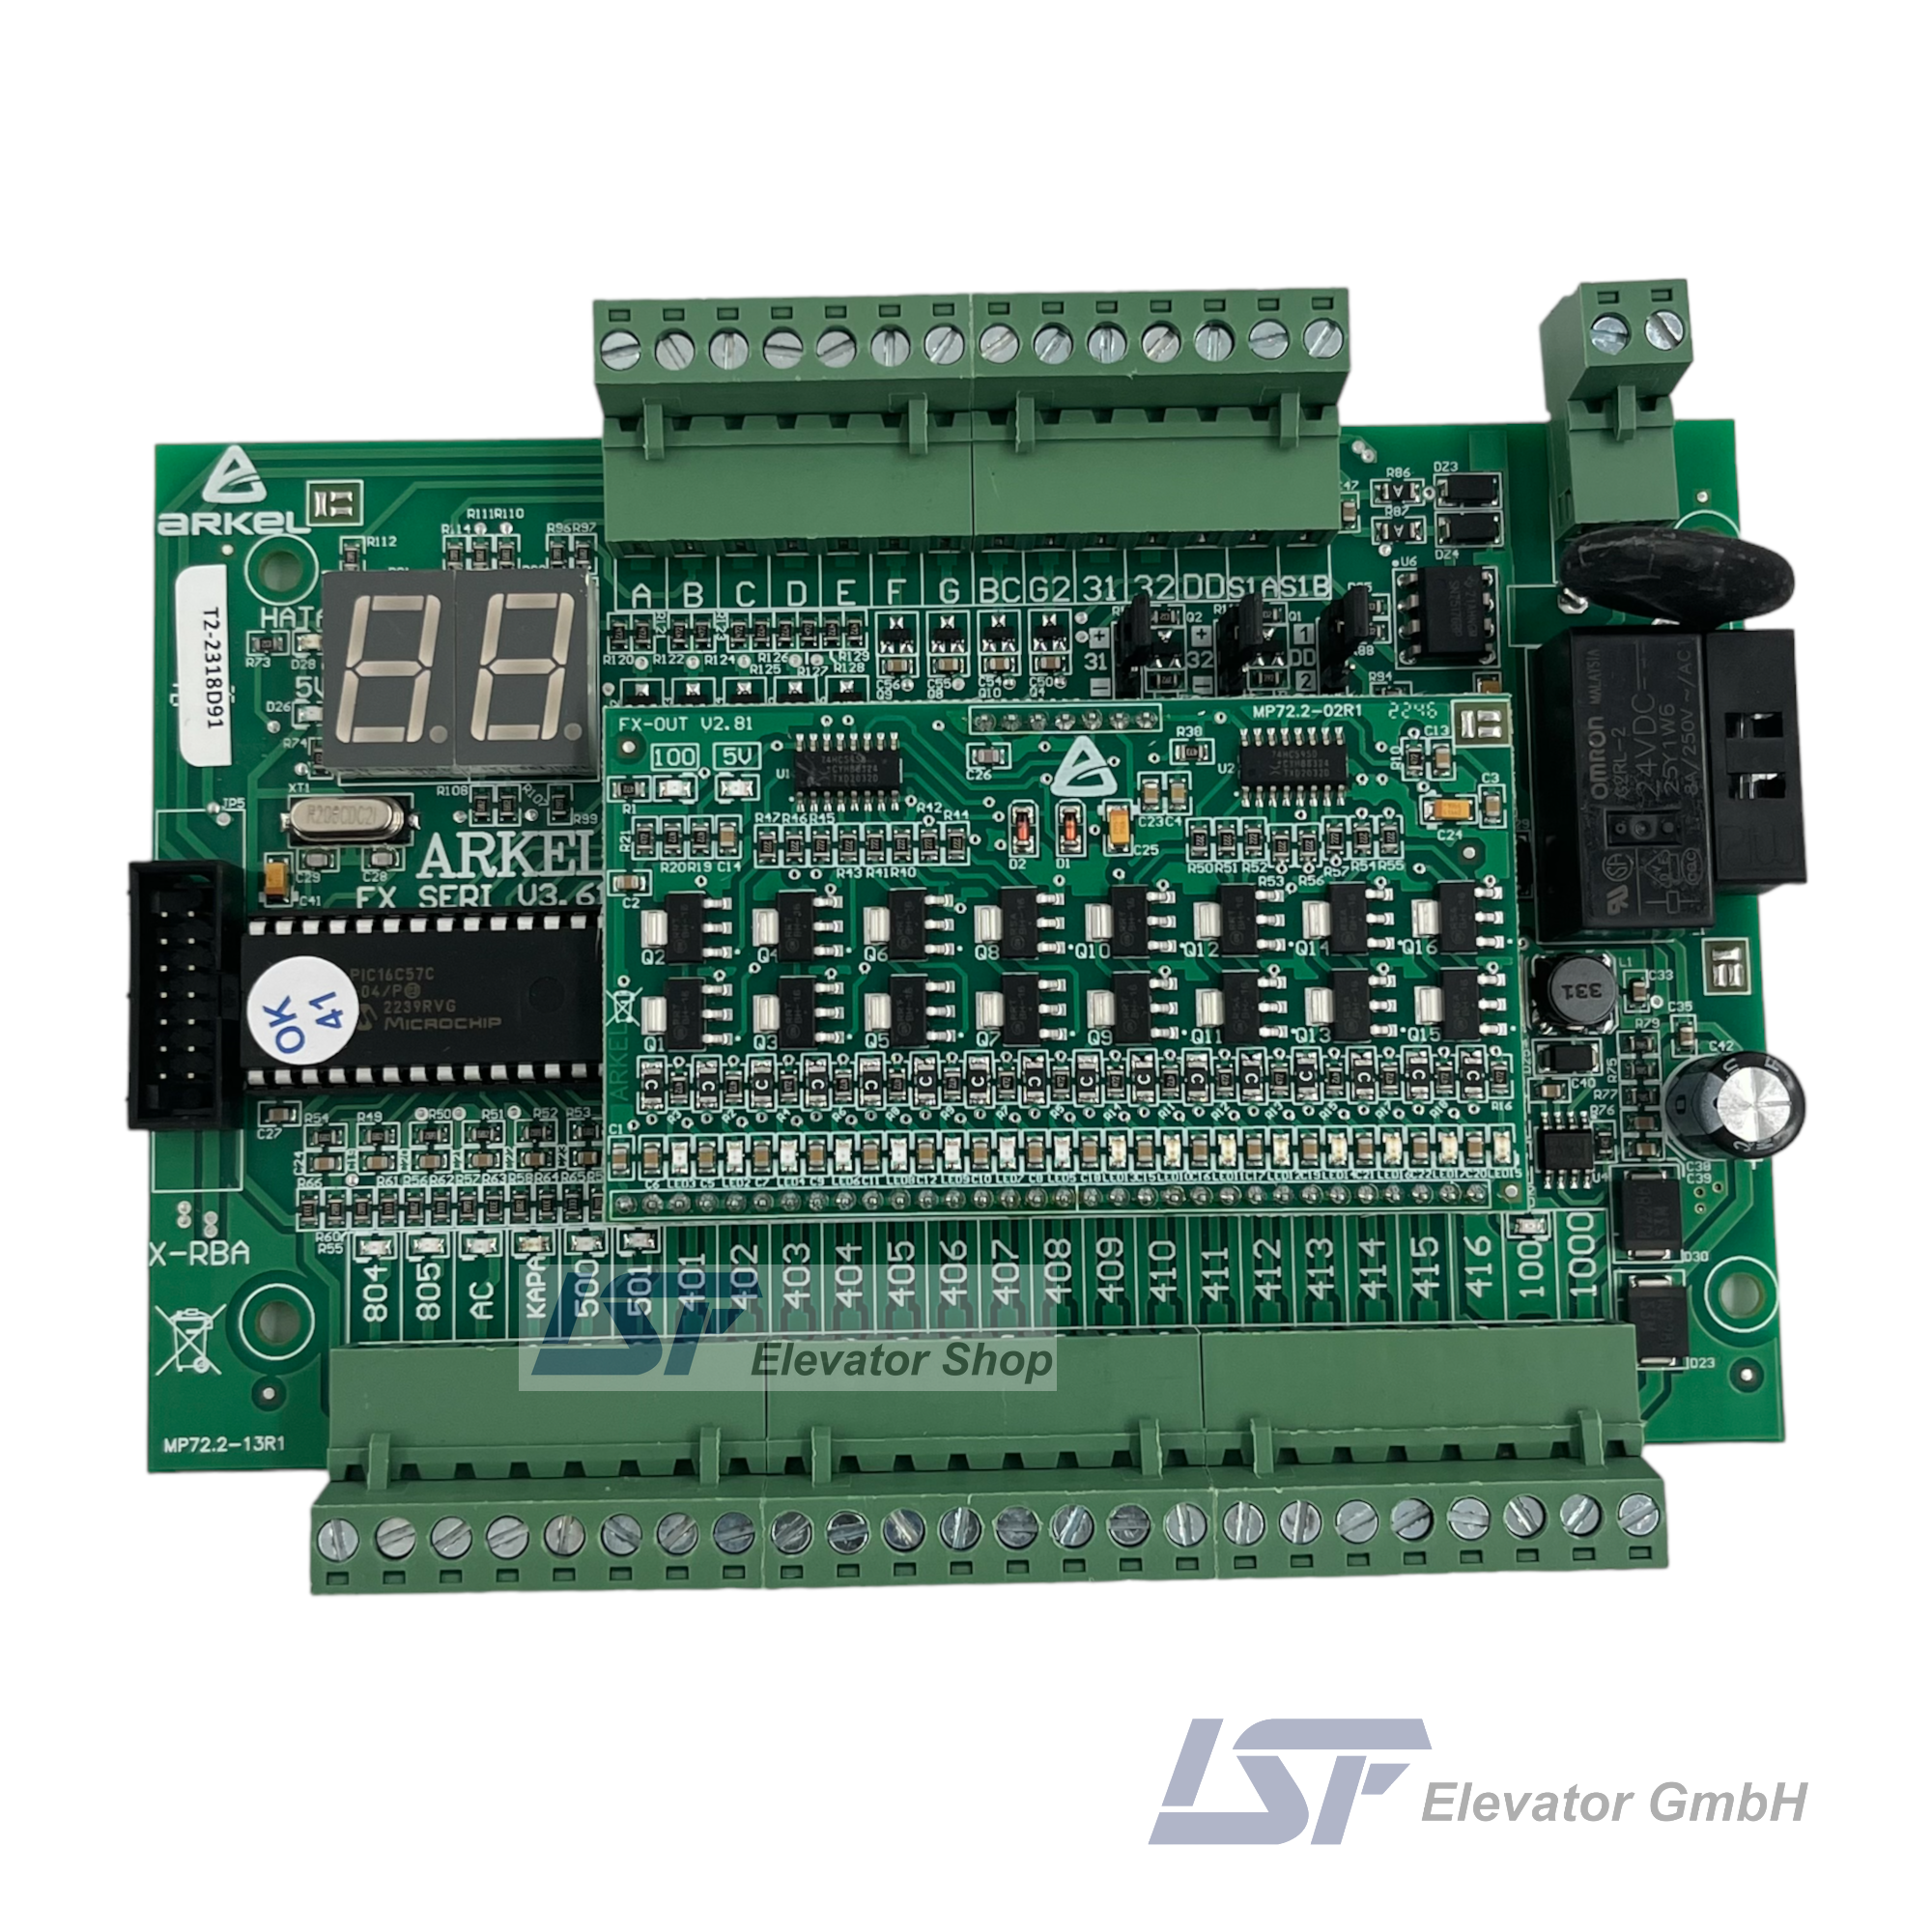 FX-seri Arkel Serial Communication Card (ARL-200S & ARL-300) for Lift Control Panel